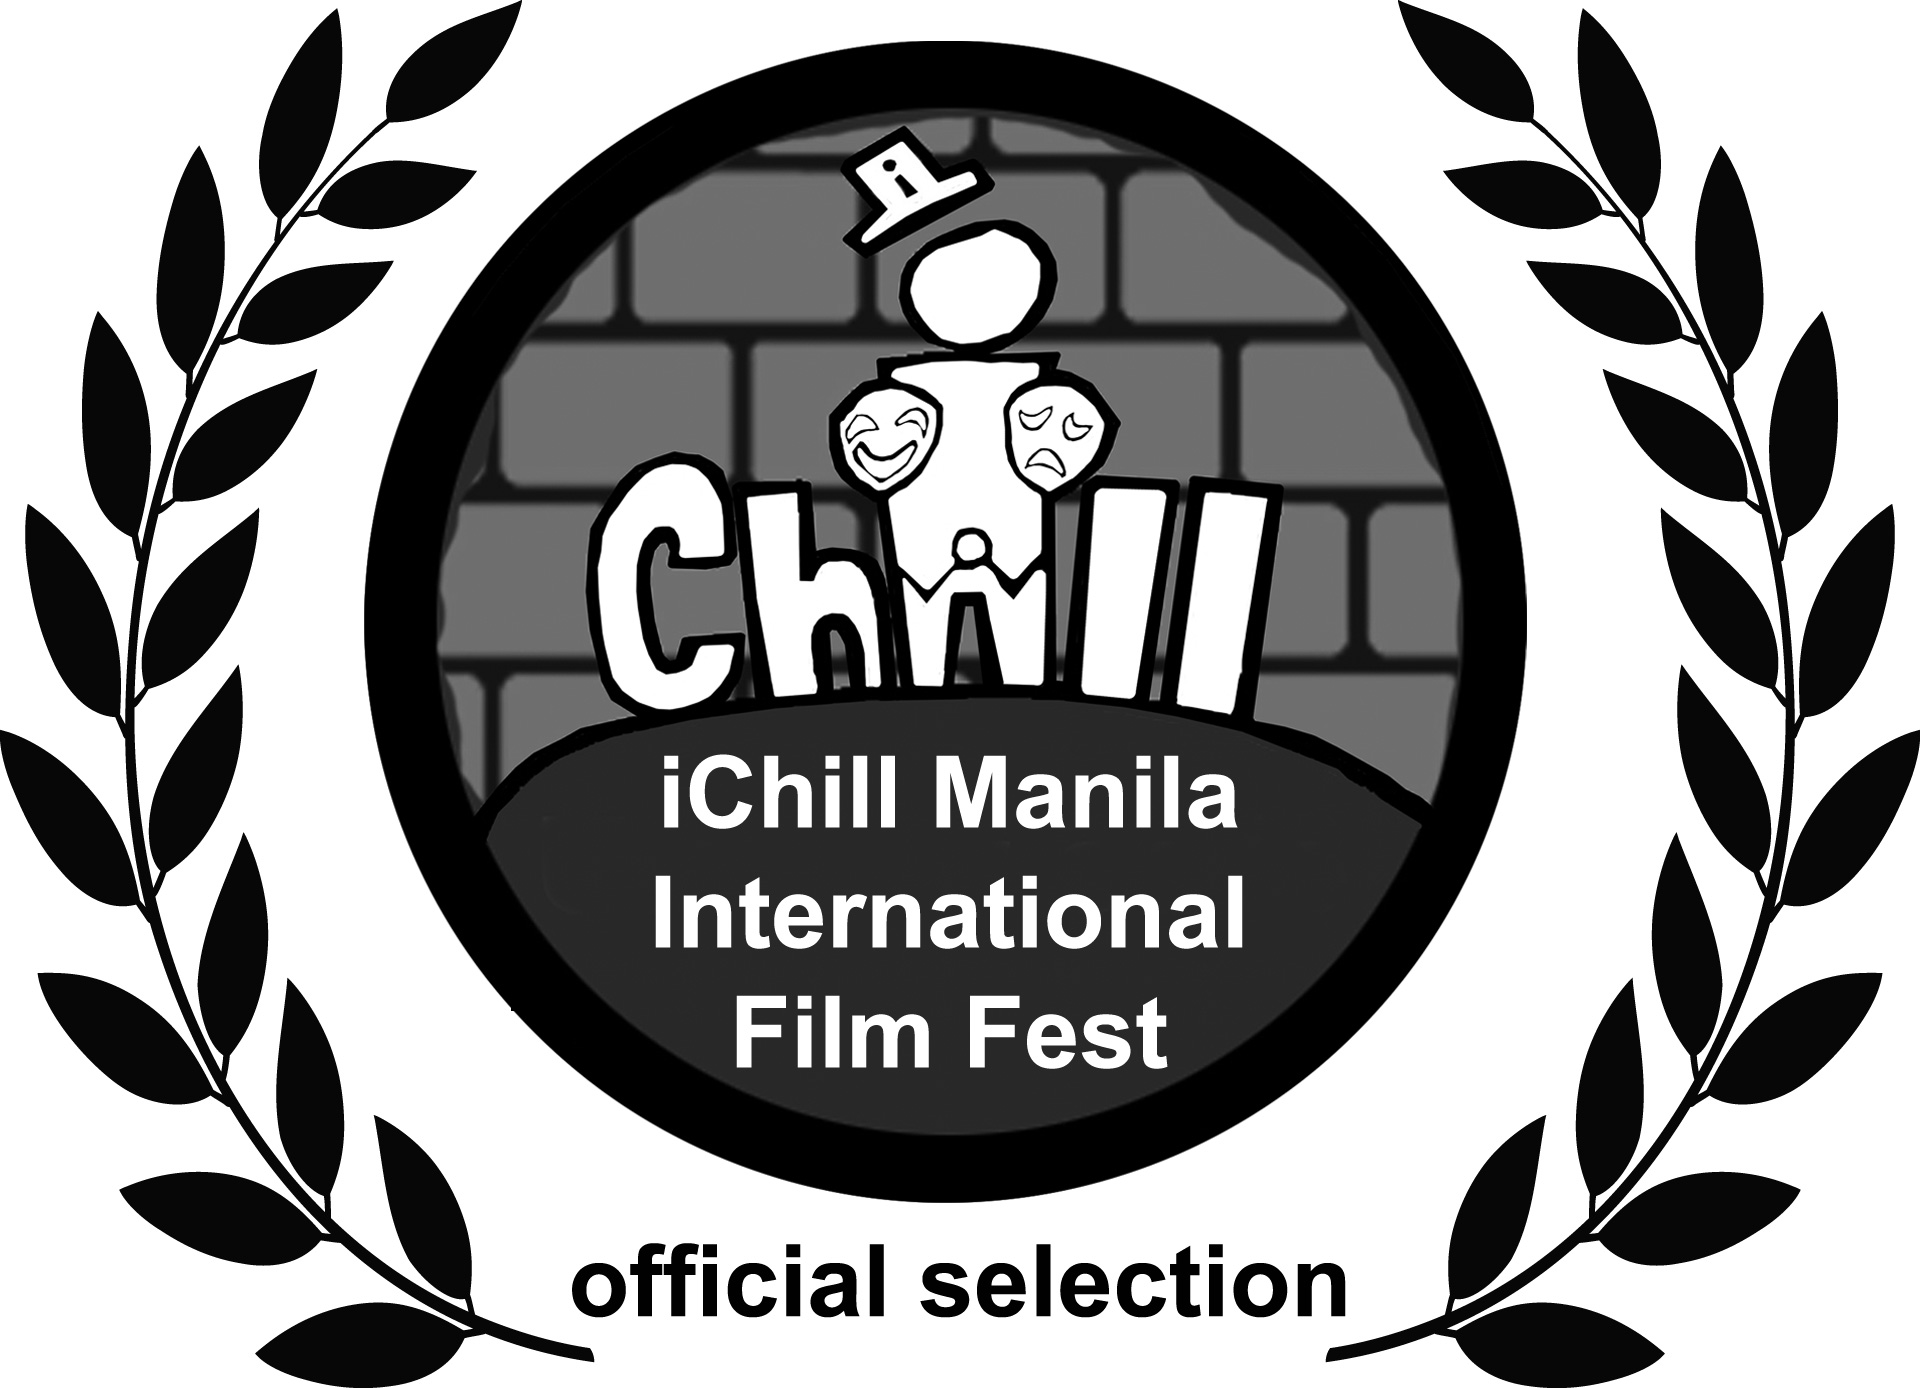 Official selected films for January 2018 iChill Manila International Film Fest